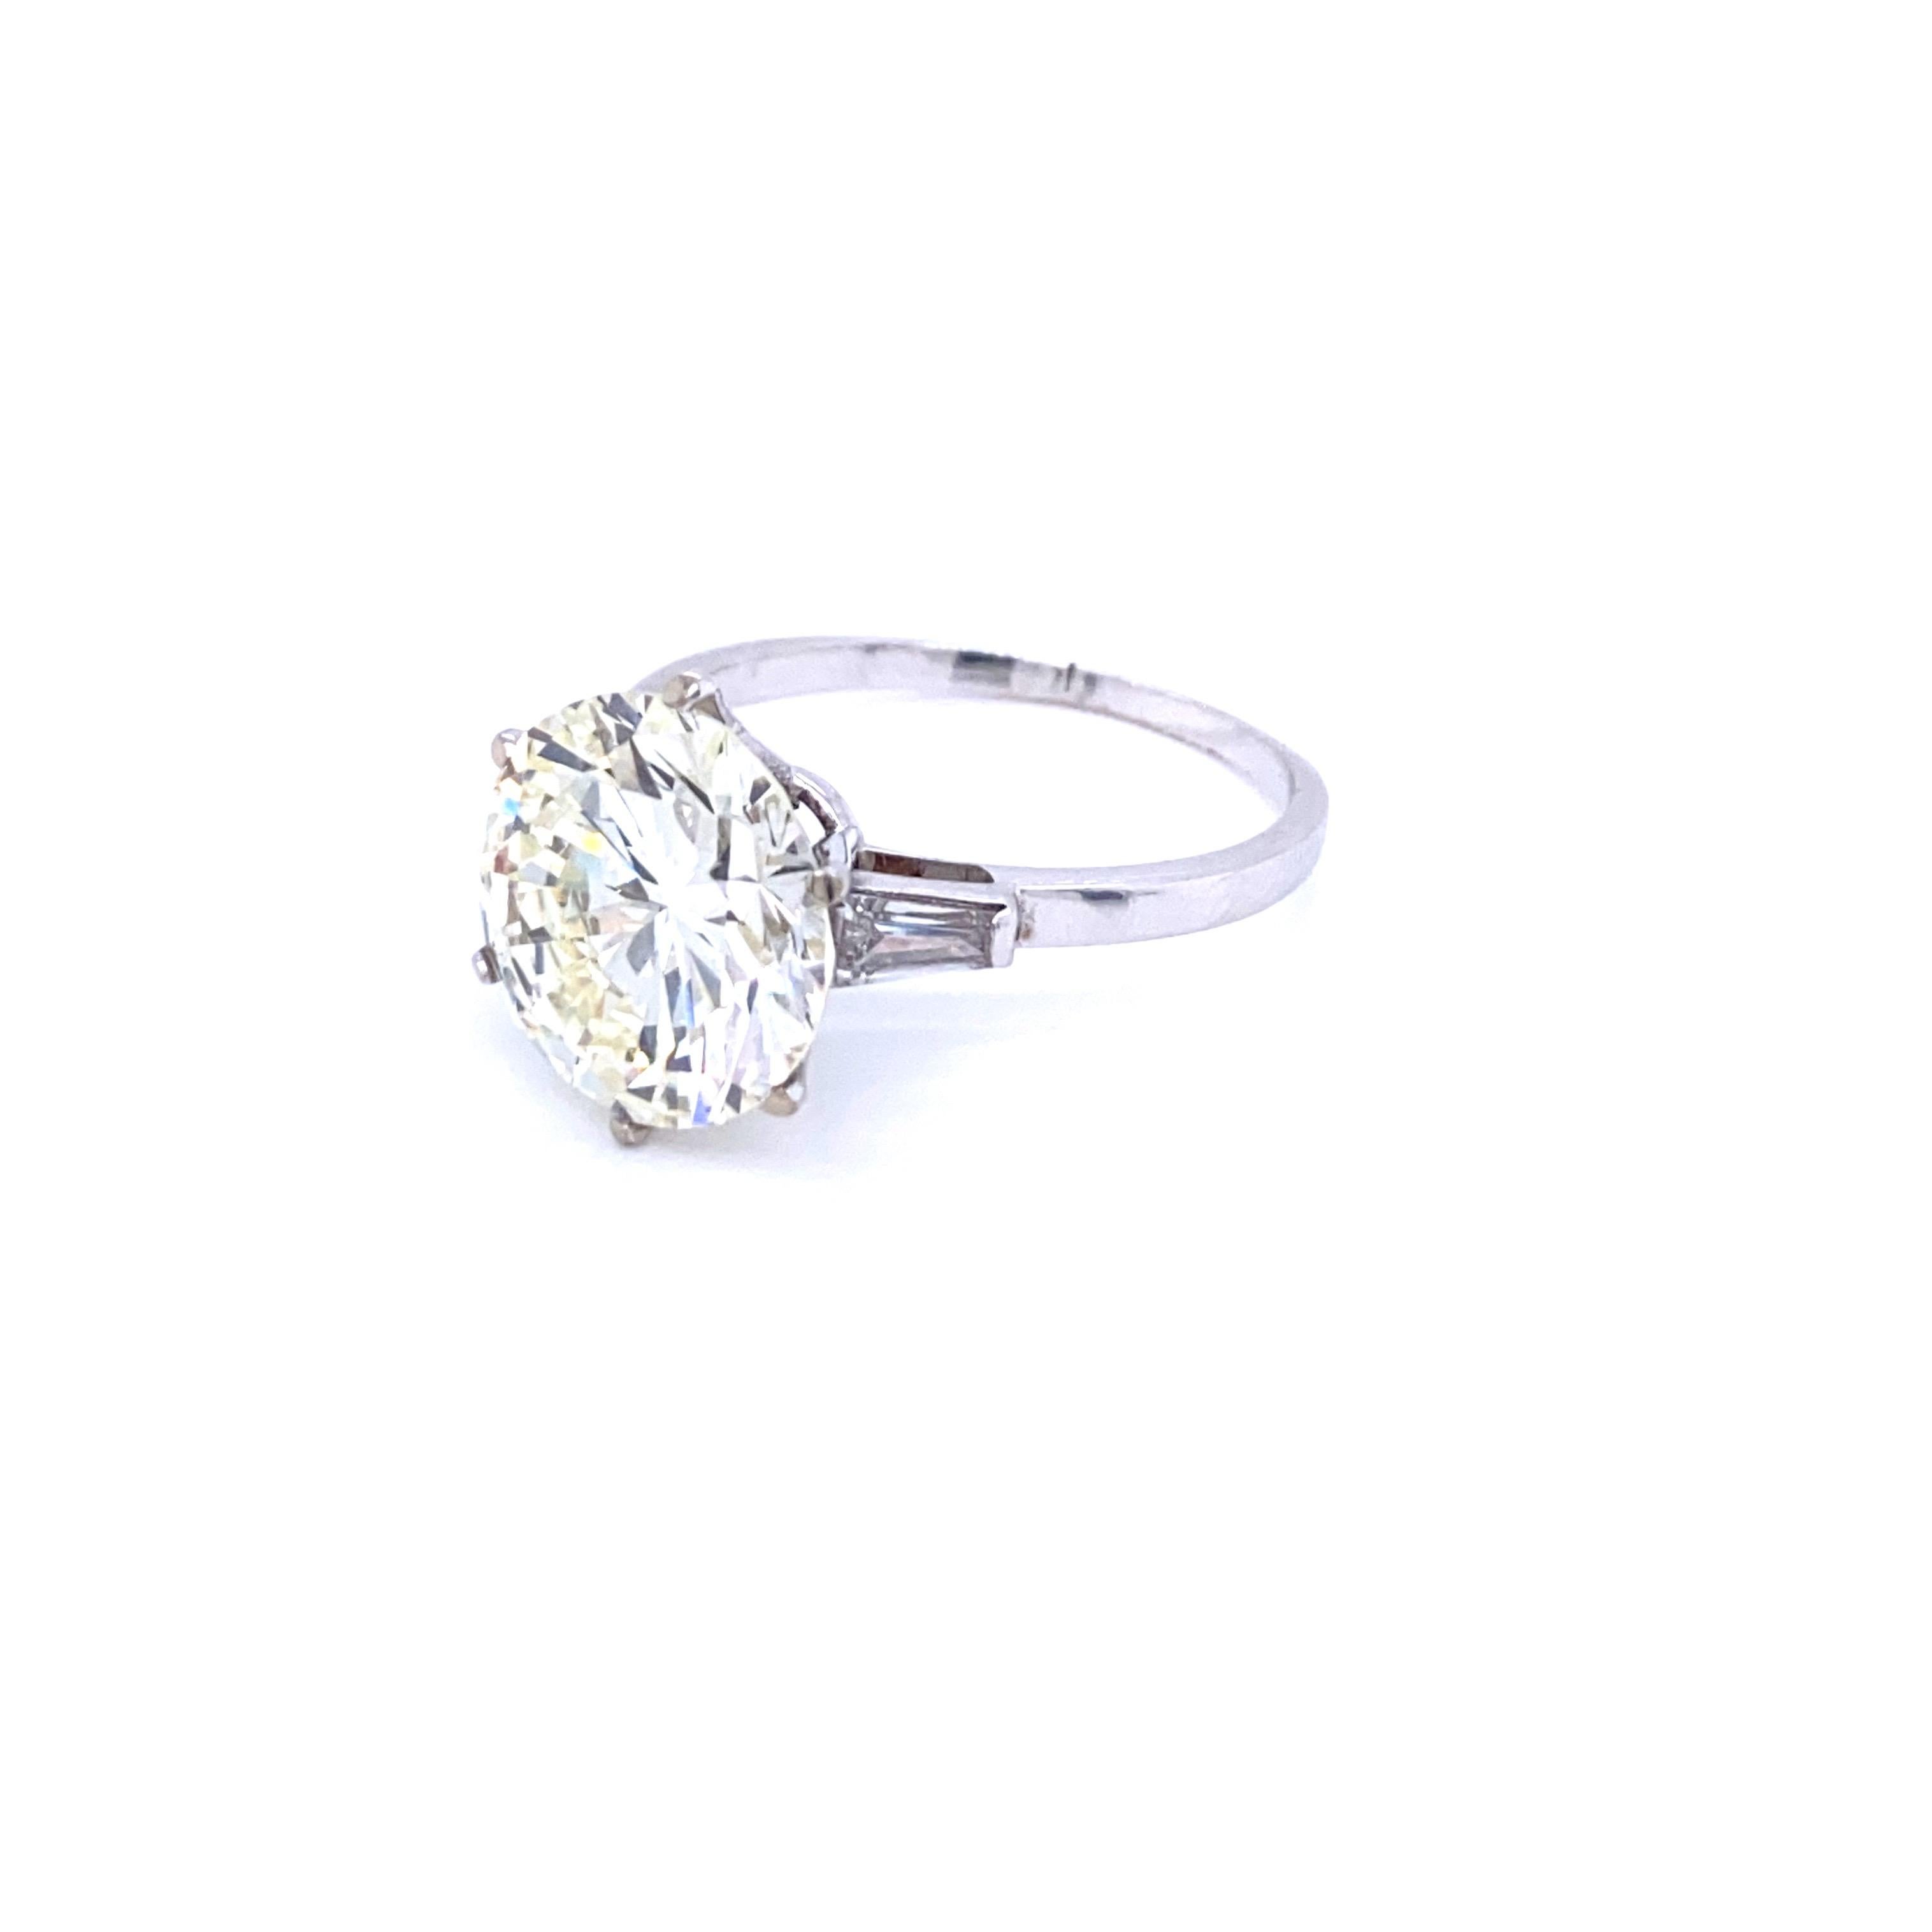 Women's or Men's GIA Certified 5.87 Carat Round Brilliant Diamond Engagement Ring